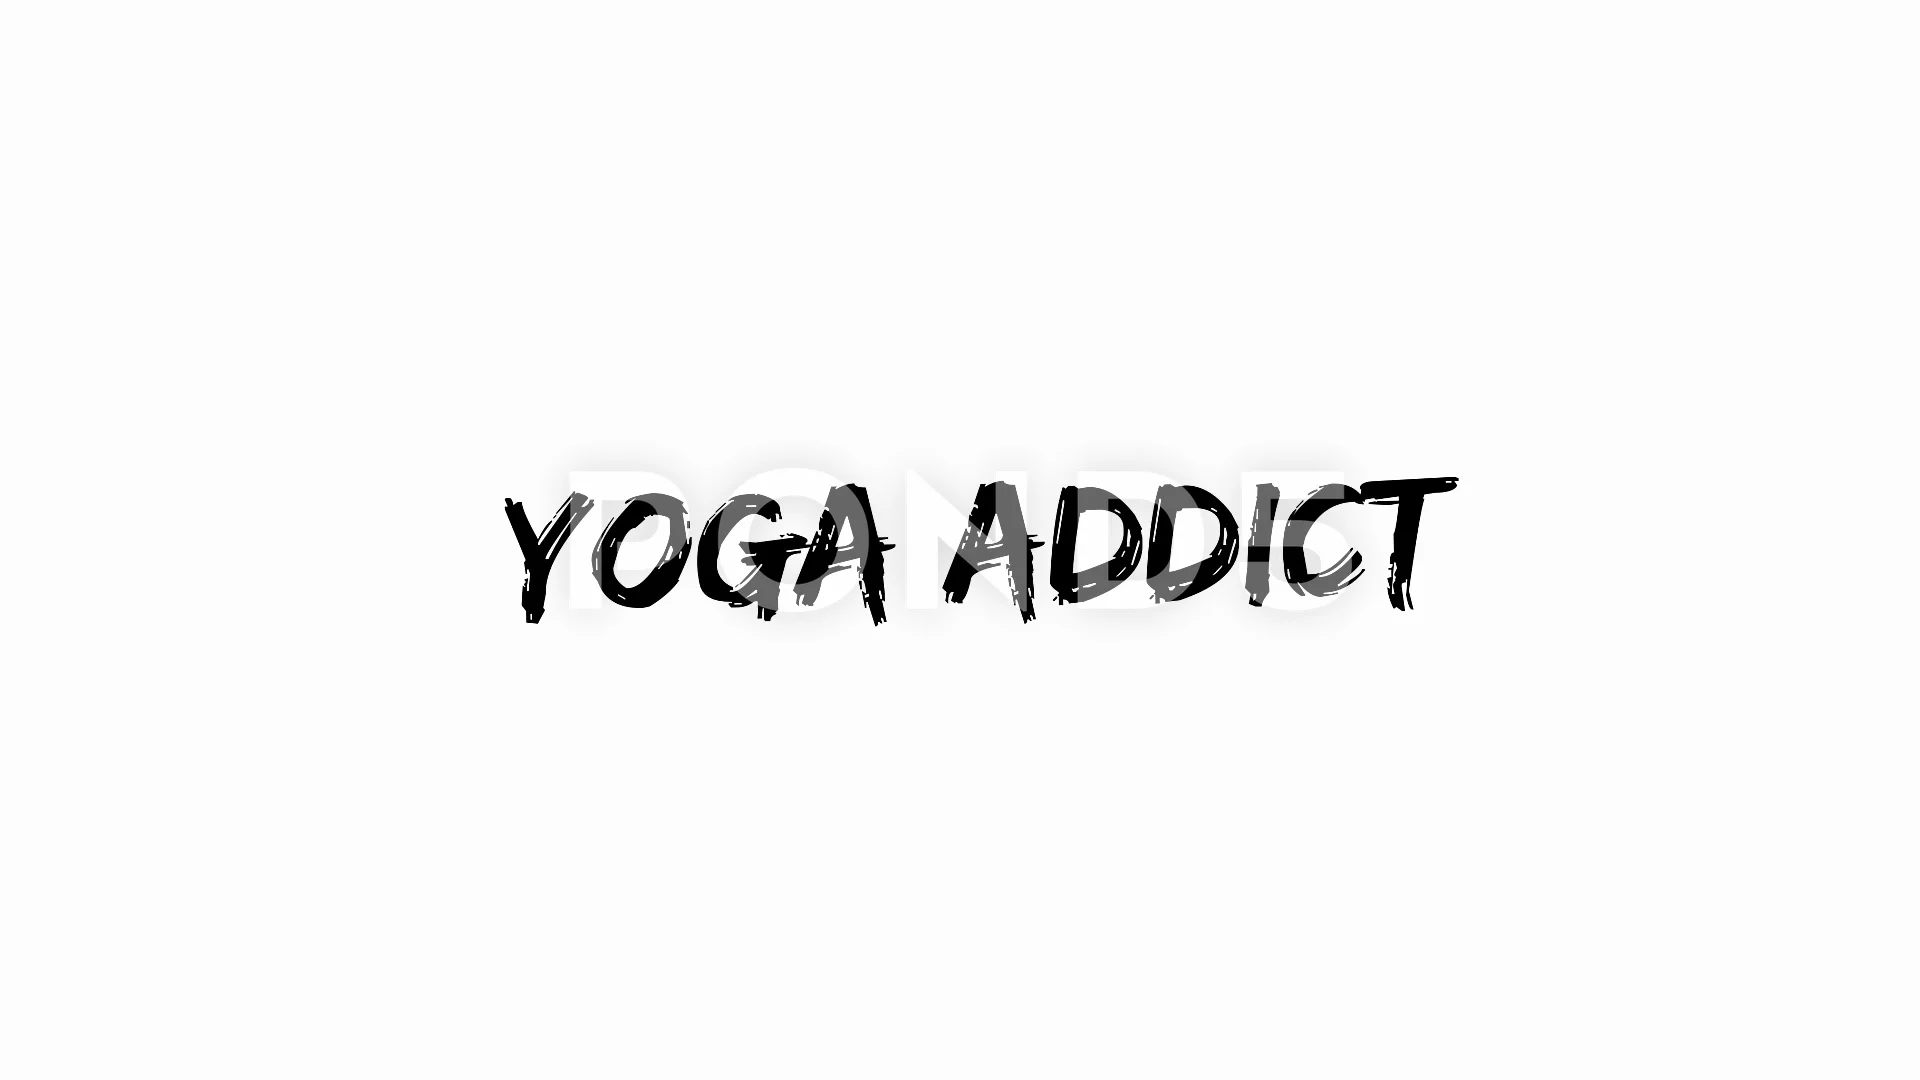 Yoga Text Transition - Yoga addict, Stock Video